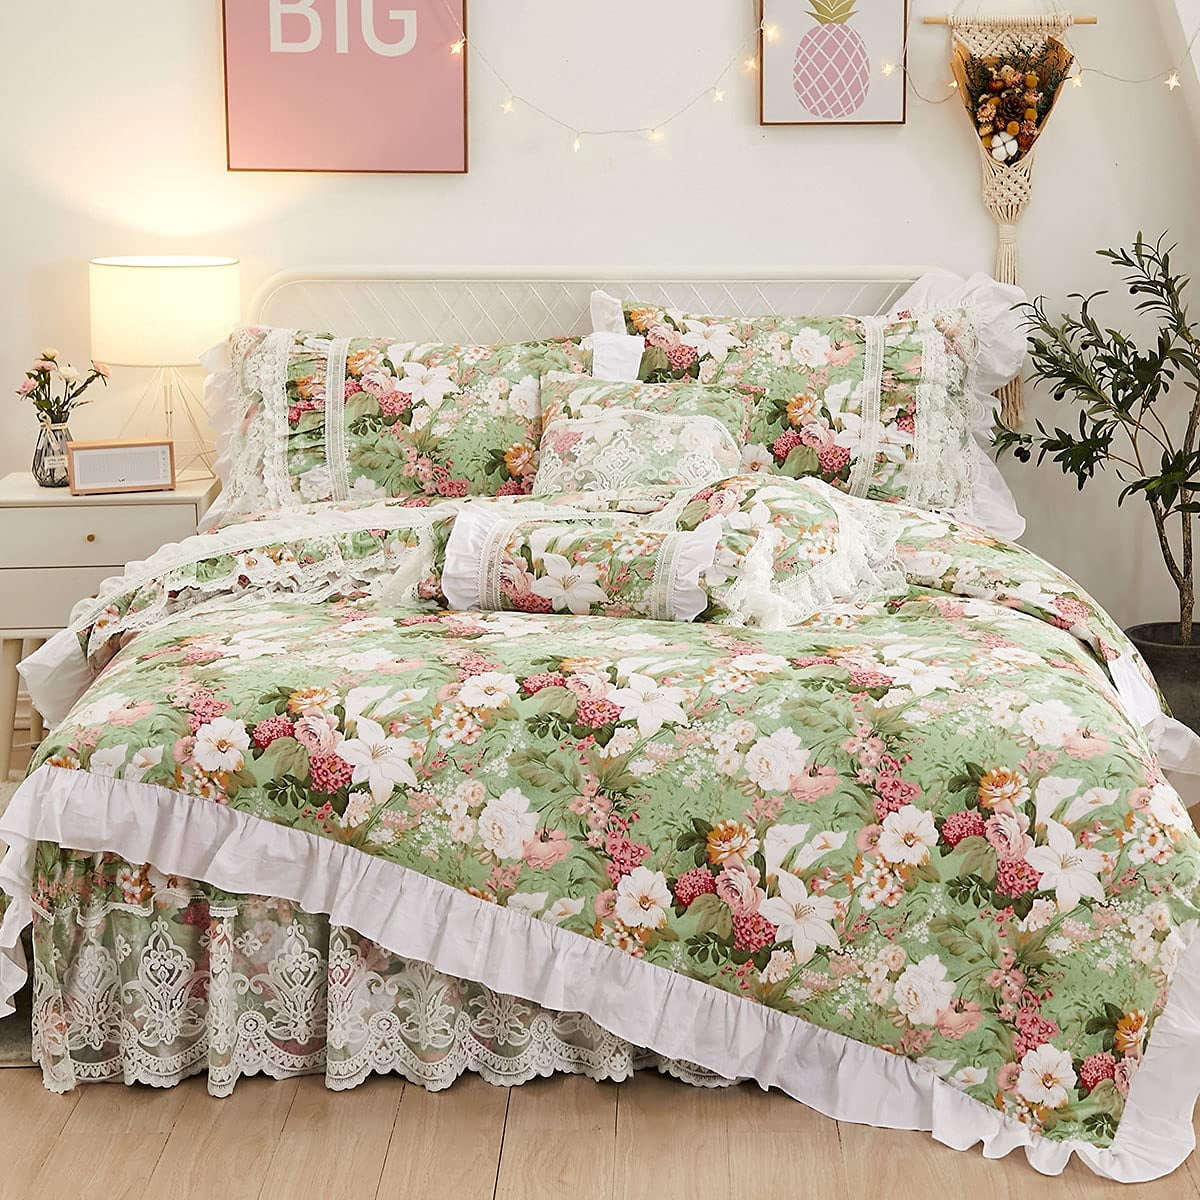 Queen FADFAY,Romantic Flower Print Bedding Set,Floral Bed Set,Princess Lace Ruffle Duvet Cover King Queen Twin,4Pcs